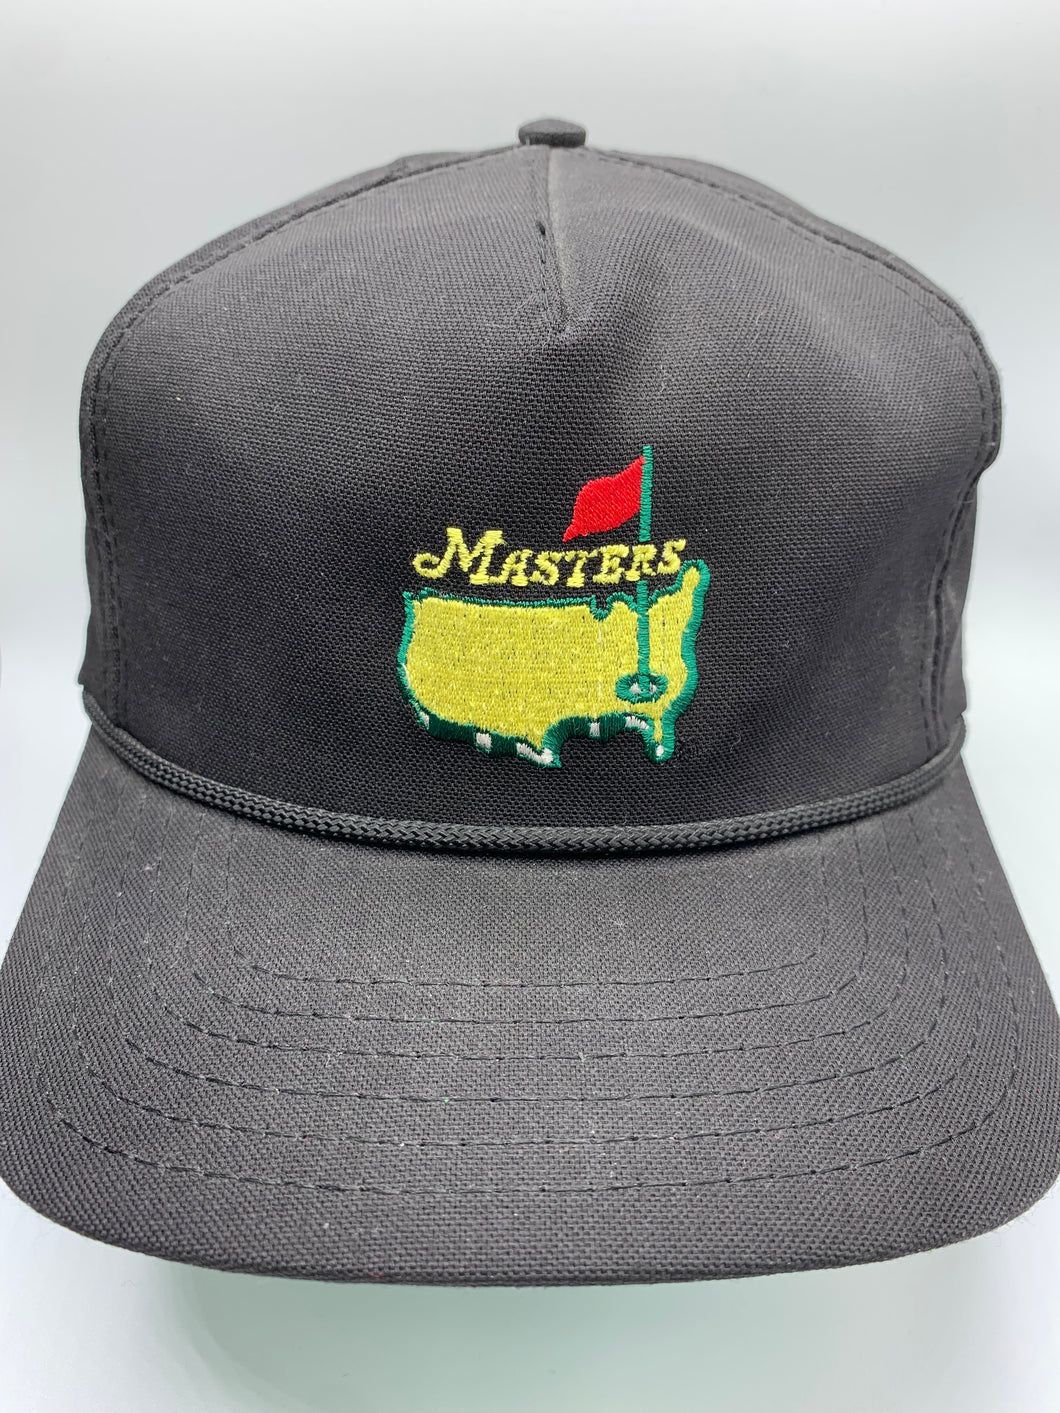 Vintage Masters X American Needle Rare Black Strapback Hat